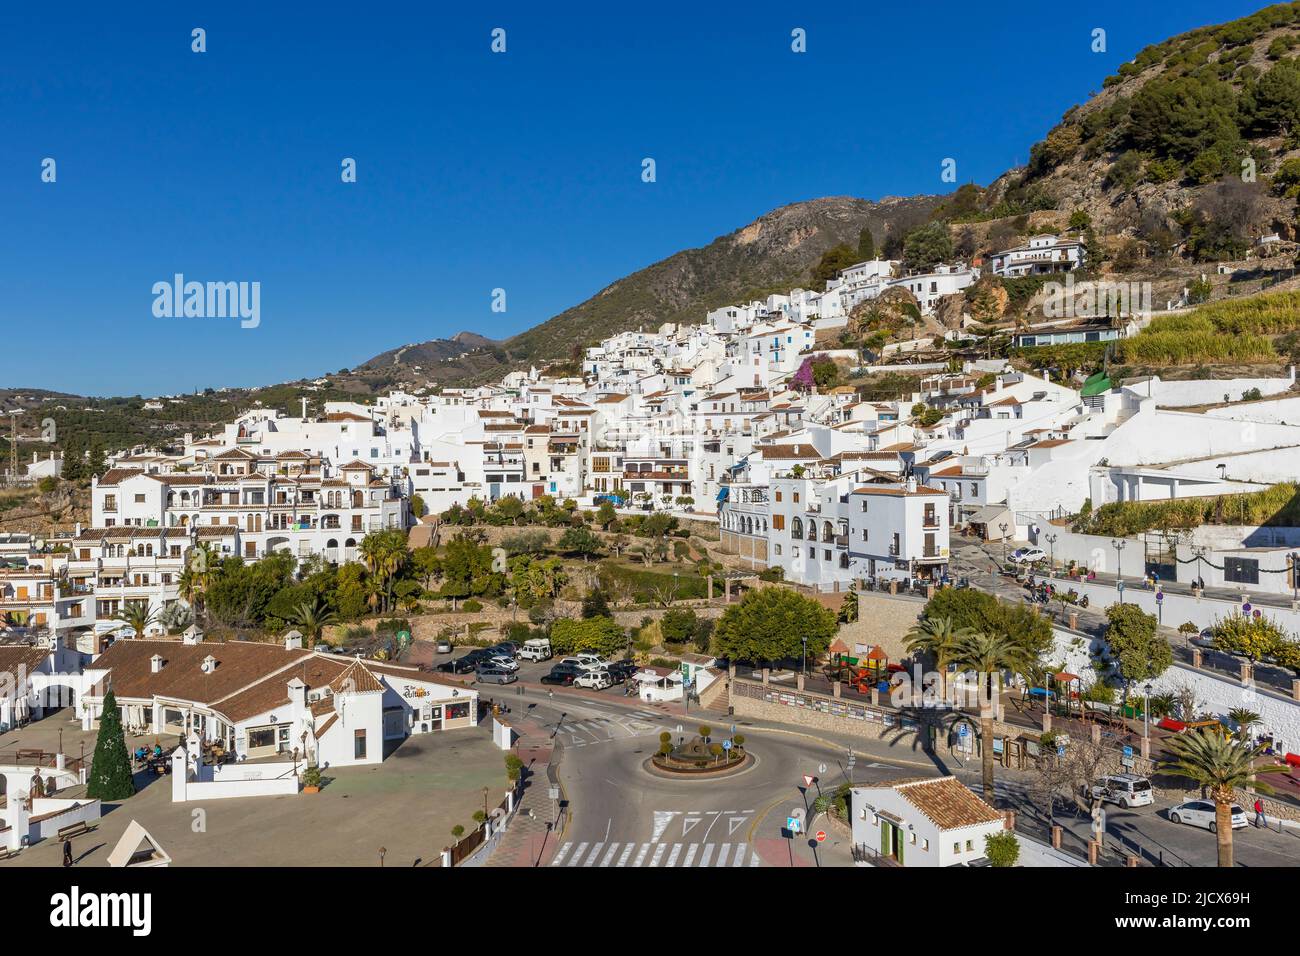 Blick über die Altstadt von Casa del Apero, Frigiliana, Axarquia Bergregion, Provinz Malaga, Andalusien, Spanien, Europa Stockfoto